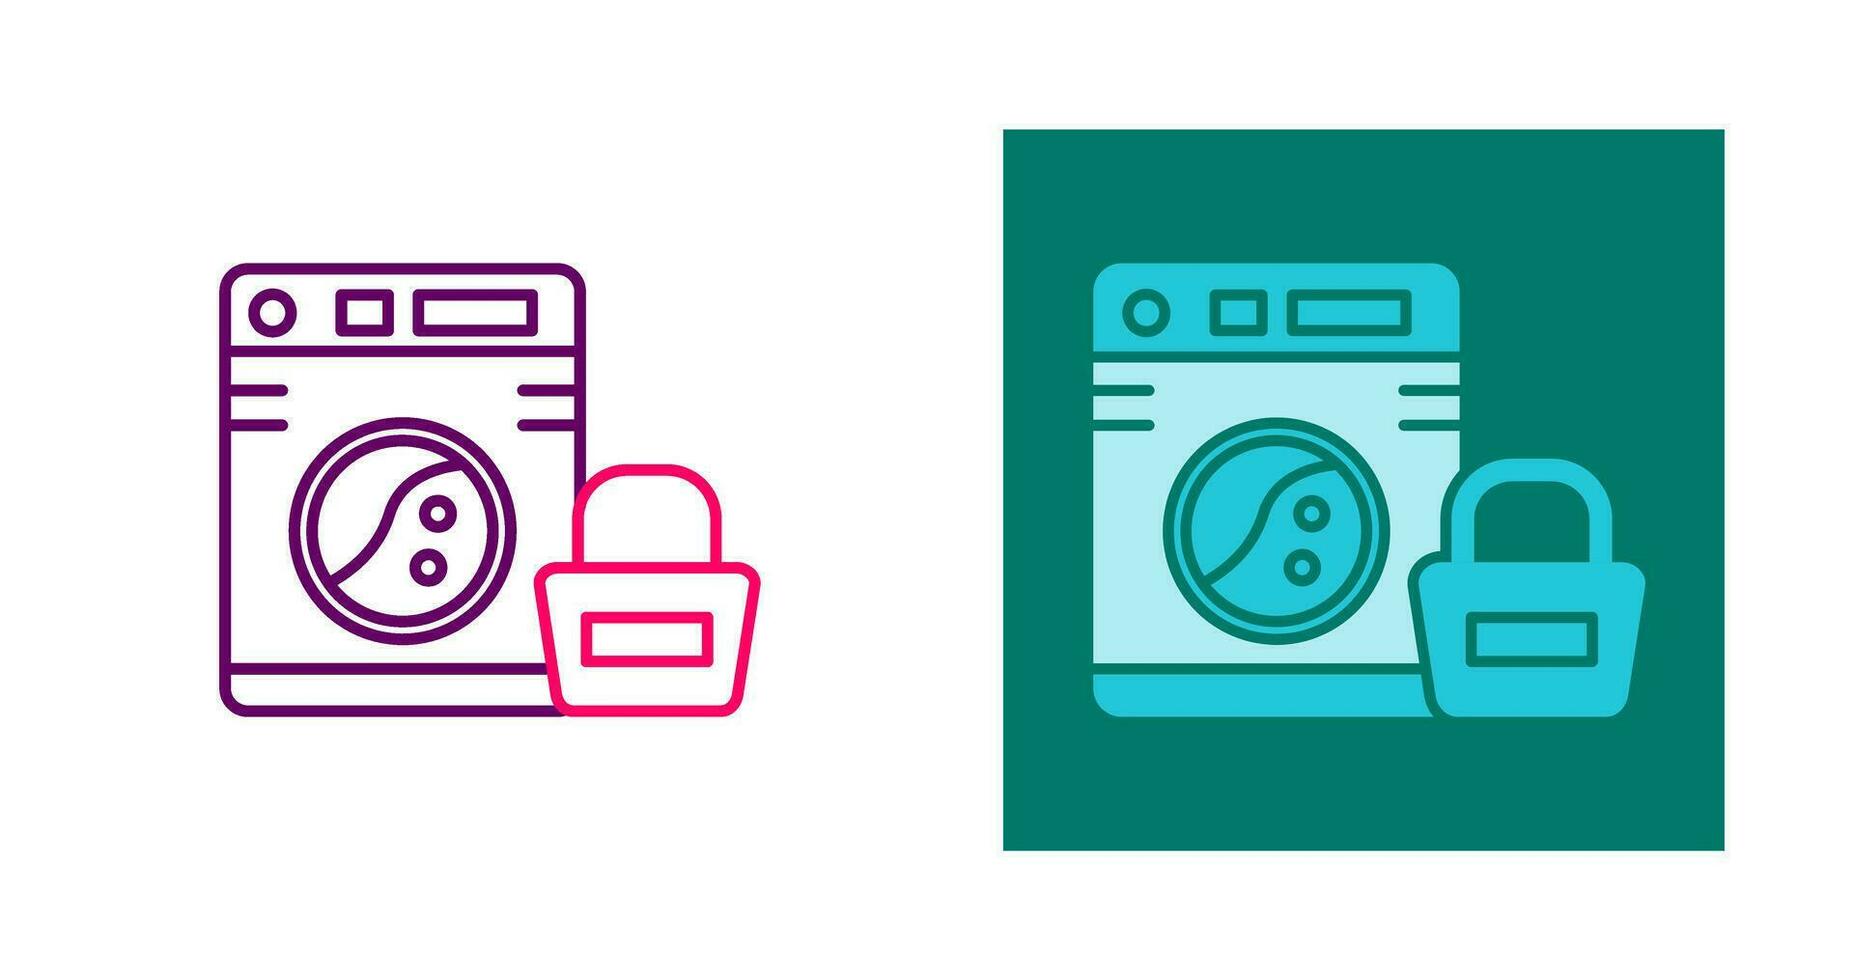 Laundry Vector Icon